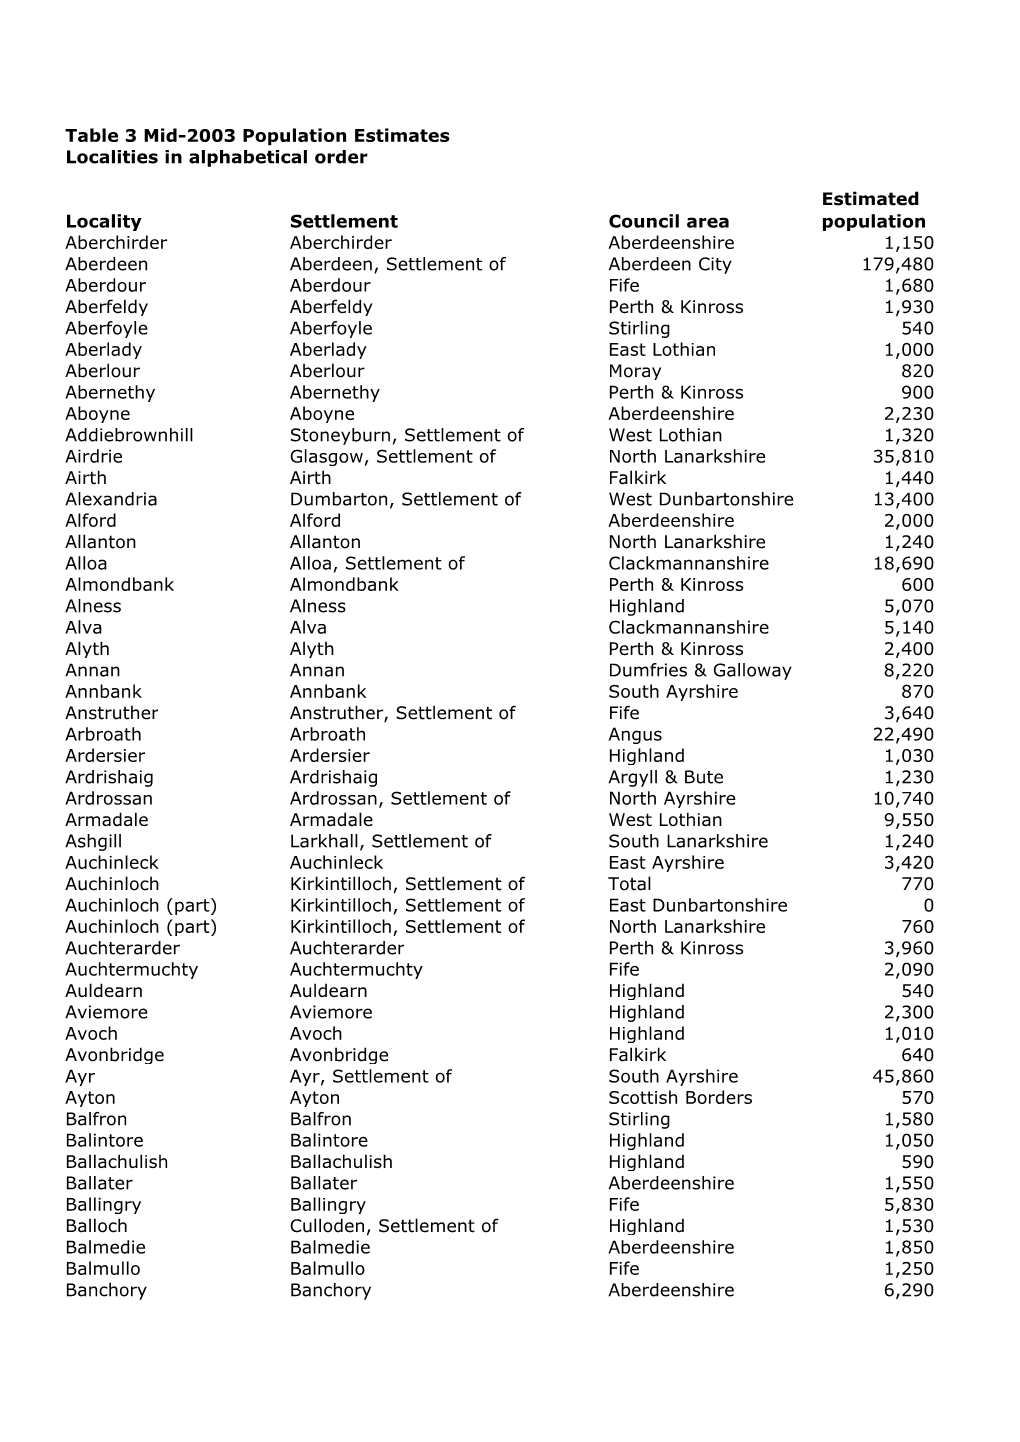 Mid-2003 Population Estimates Localities in Alphabetical Order